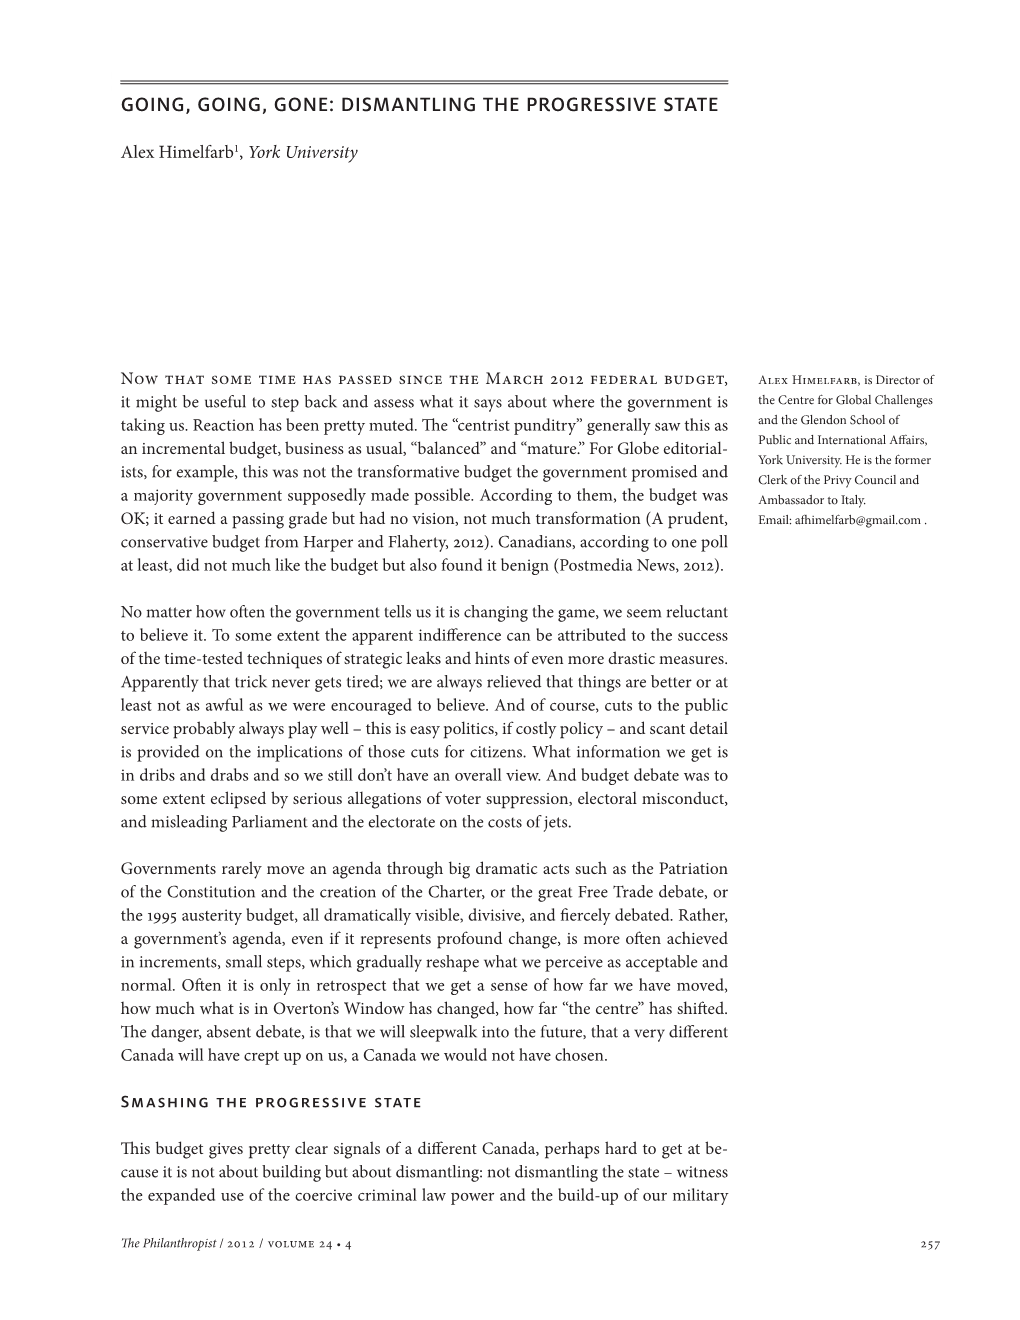 DISMANTLING the PROGRESSIVE STATE the Philanthropist 2012 / Volume 24 • 4 Alex Himelfarb1, York University